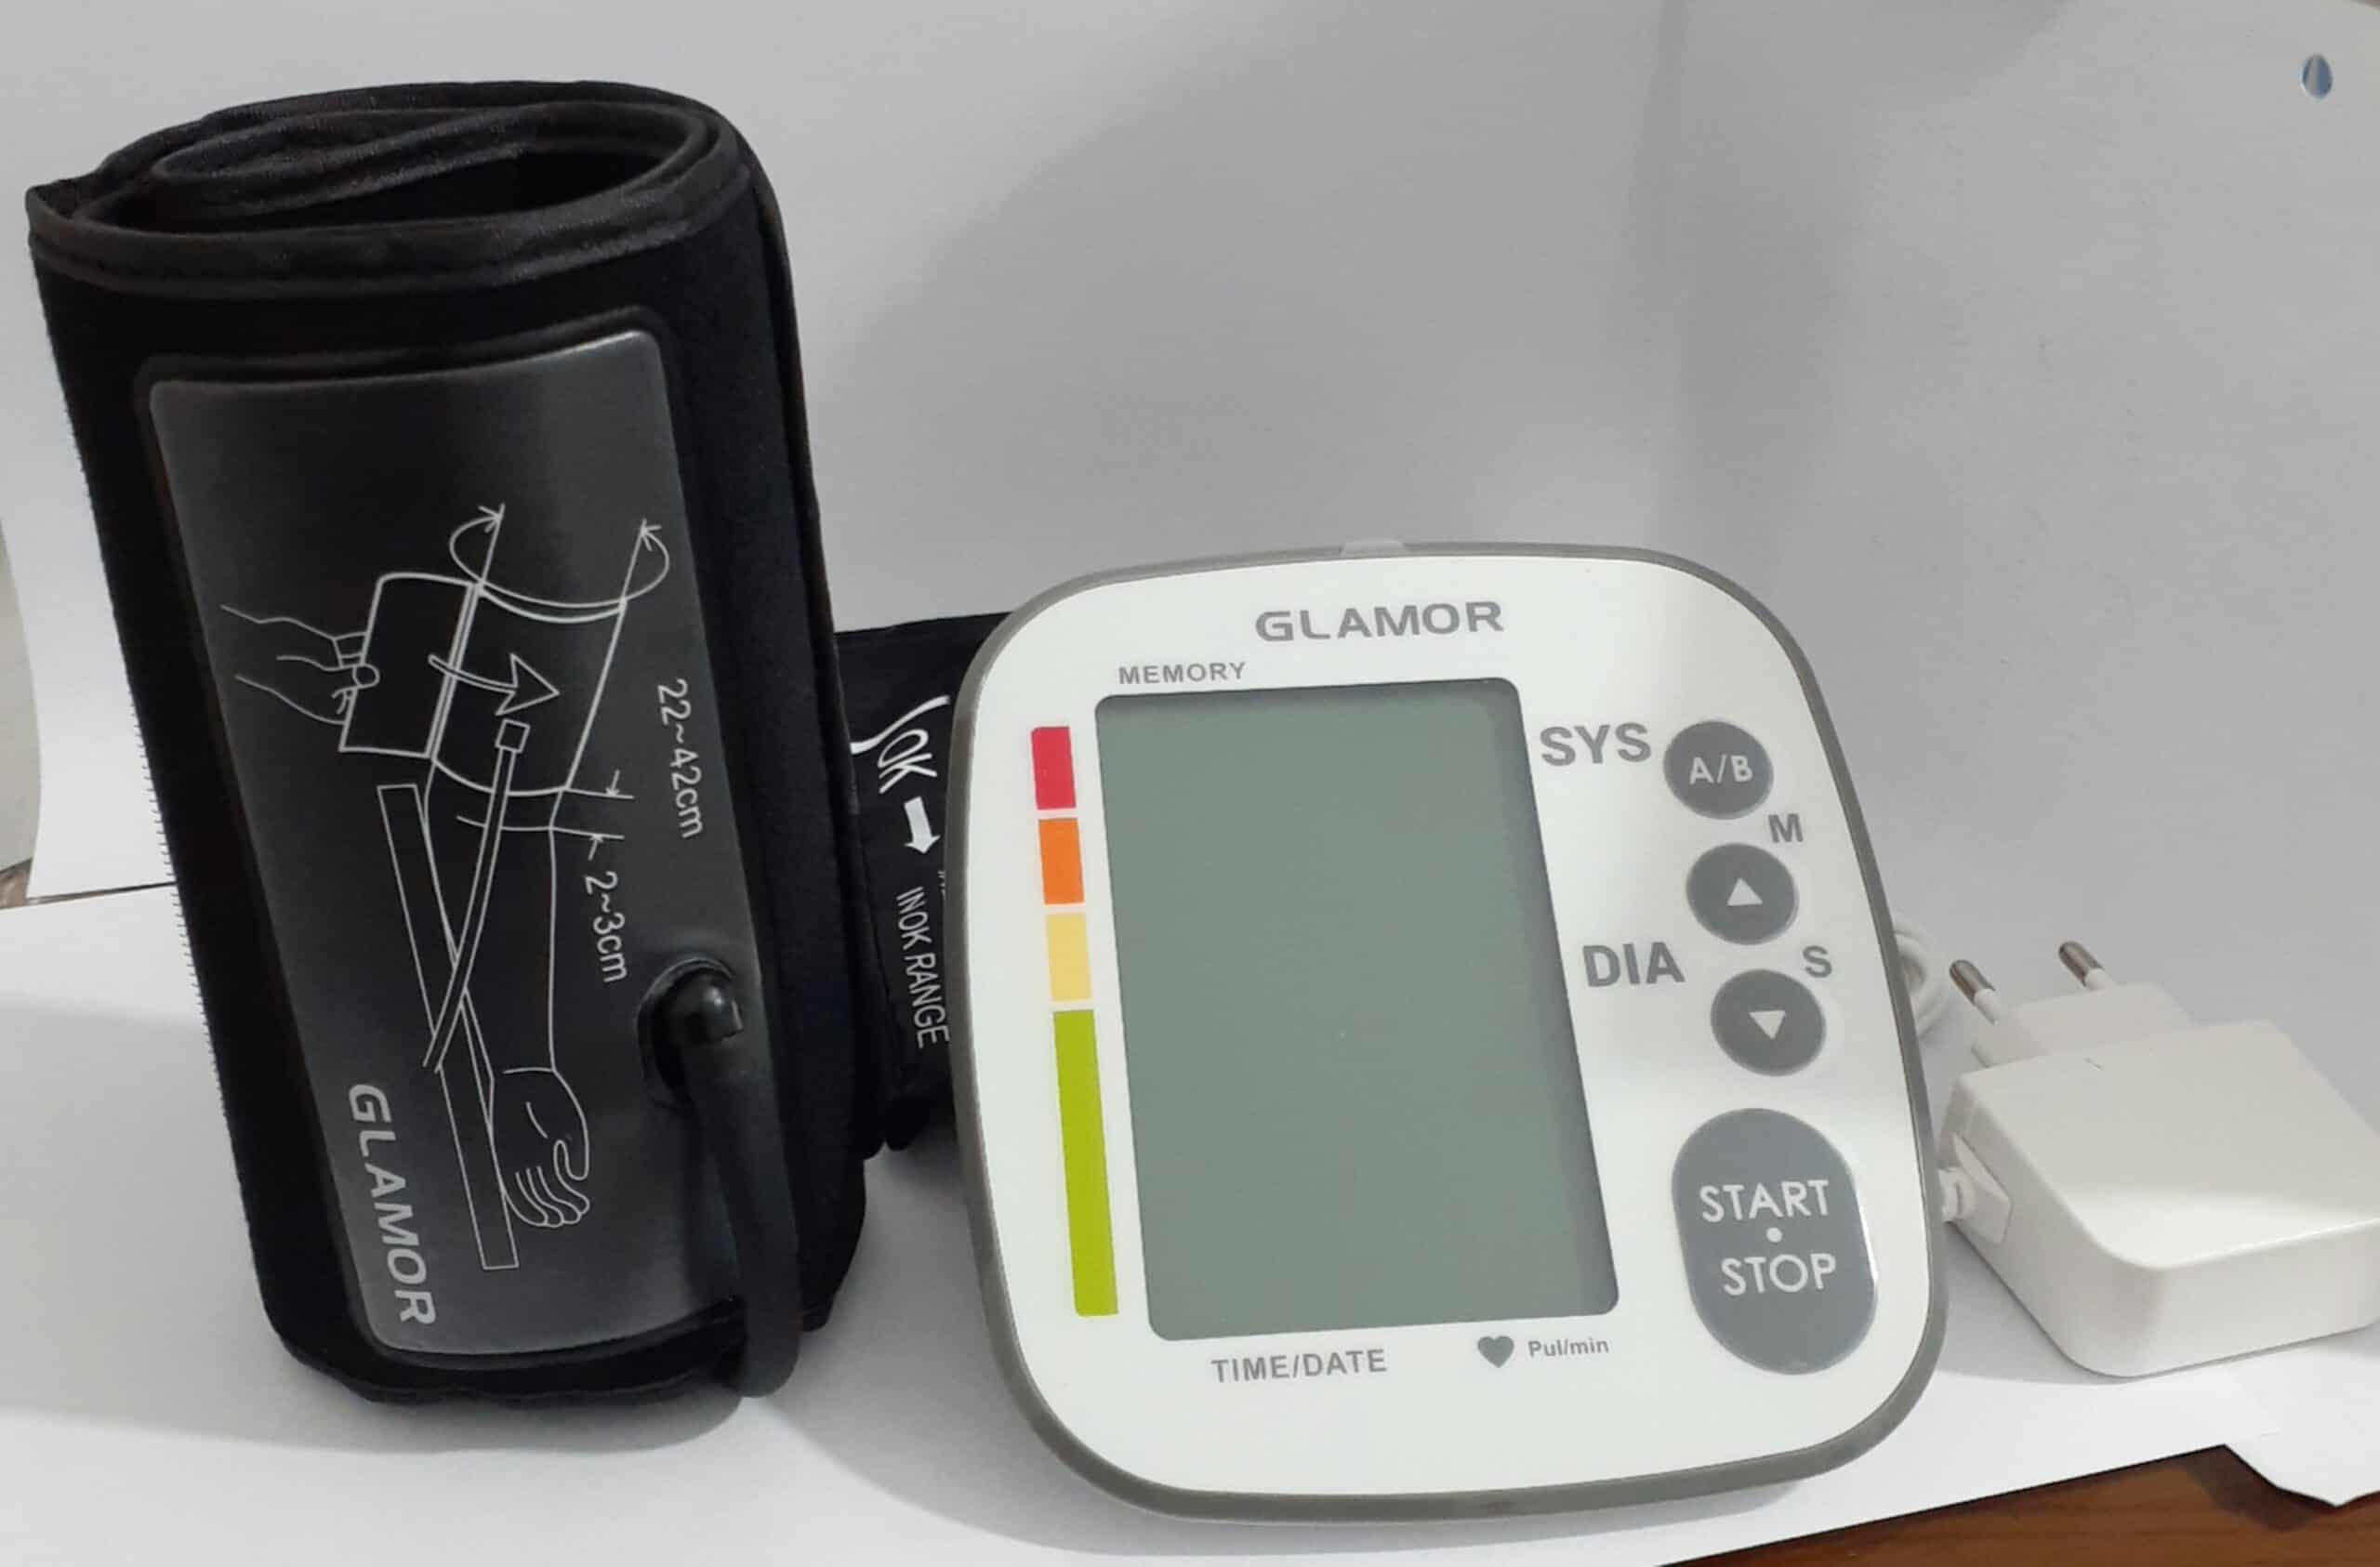 دستگاه فشار خون گلامور hl858na